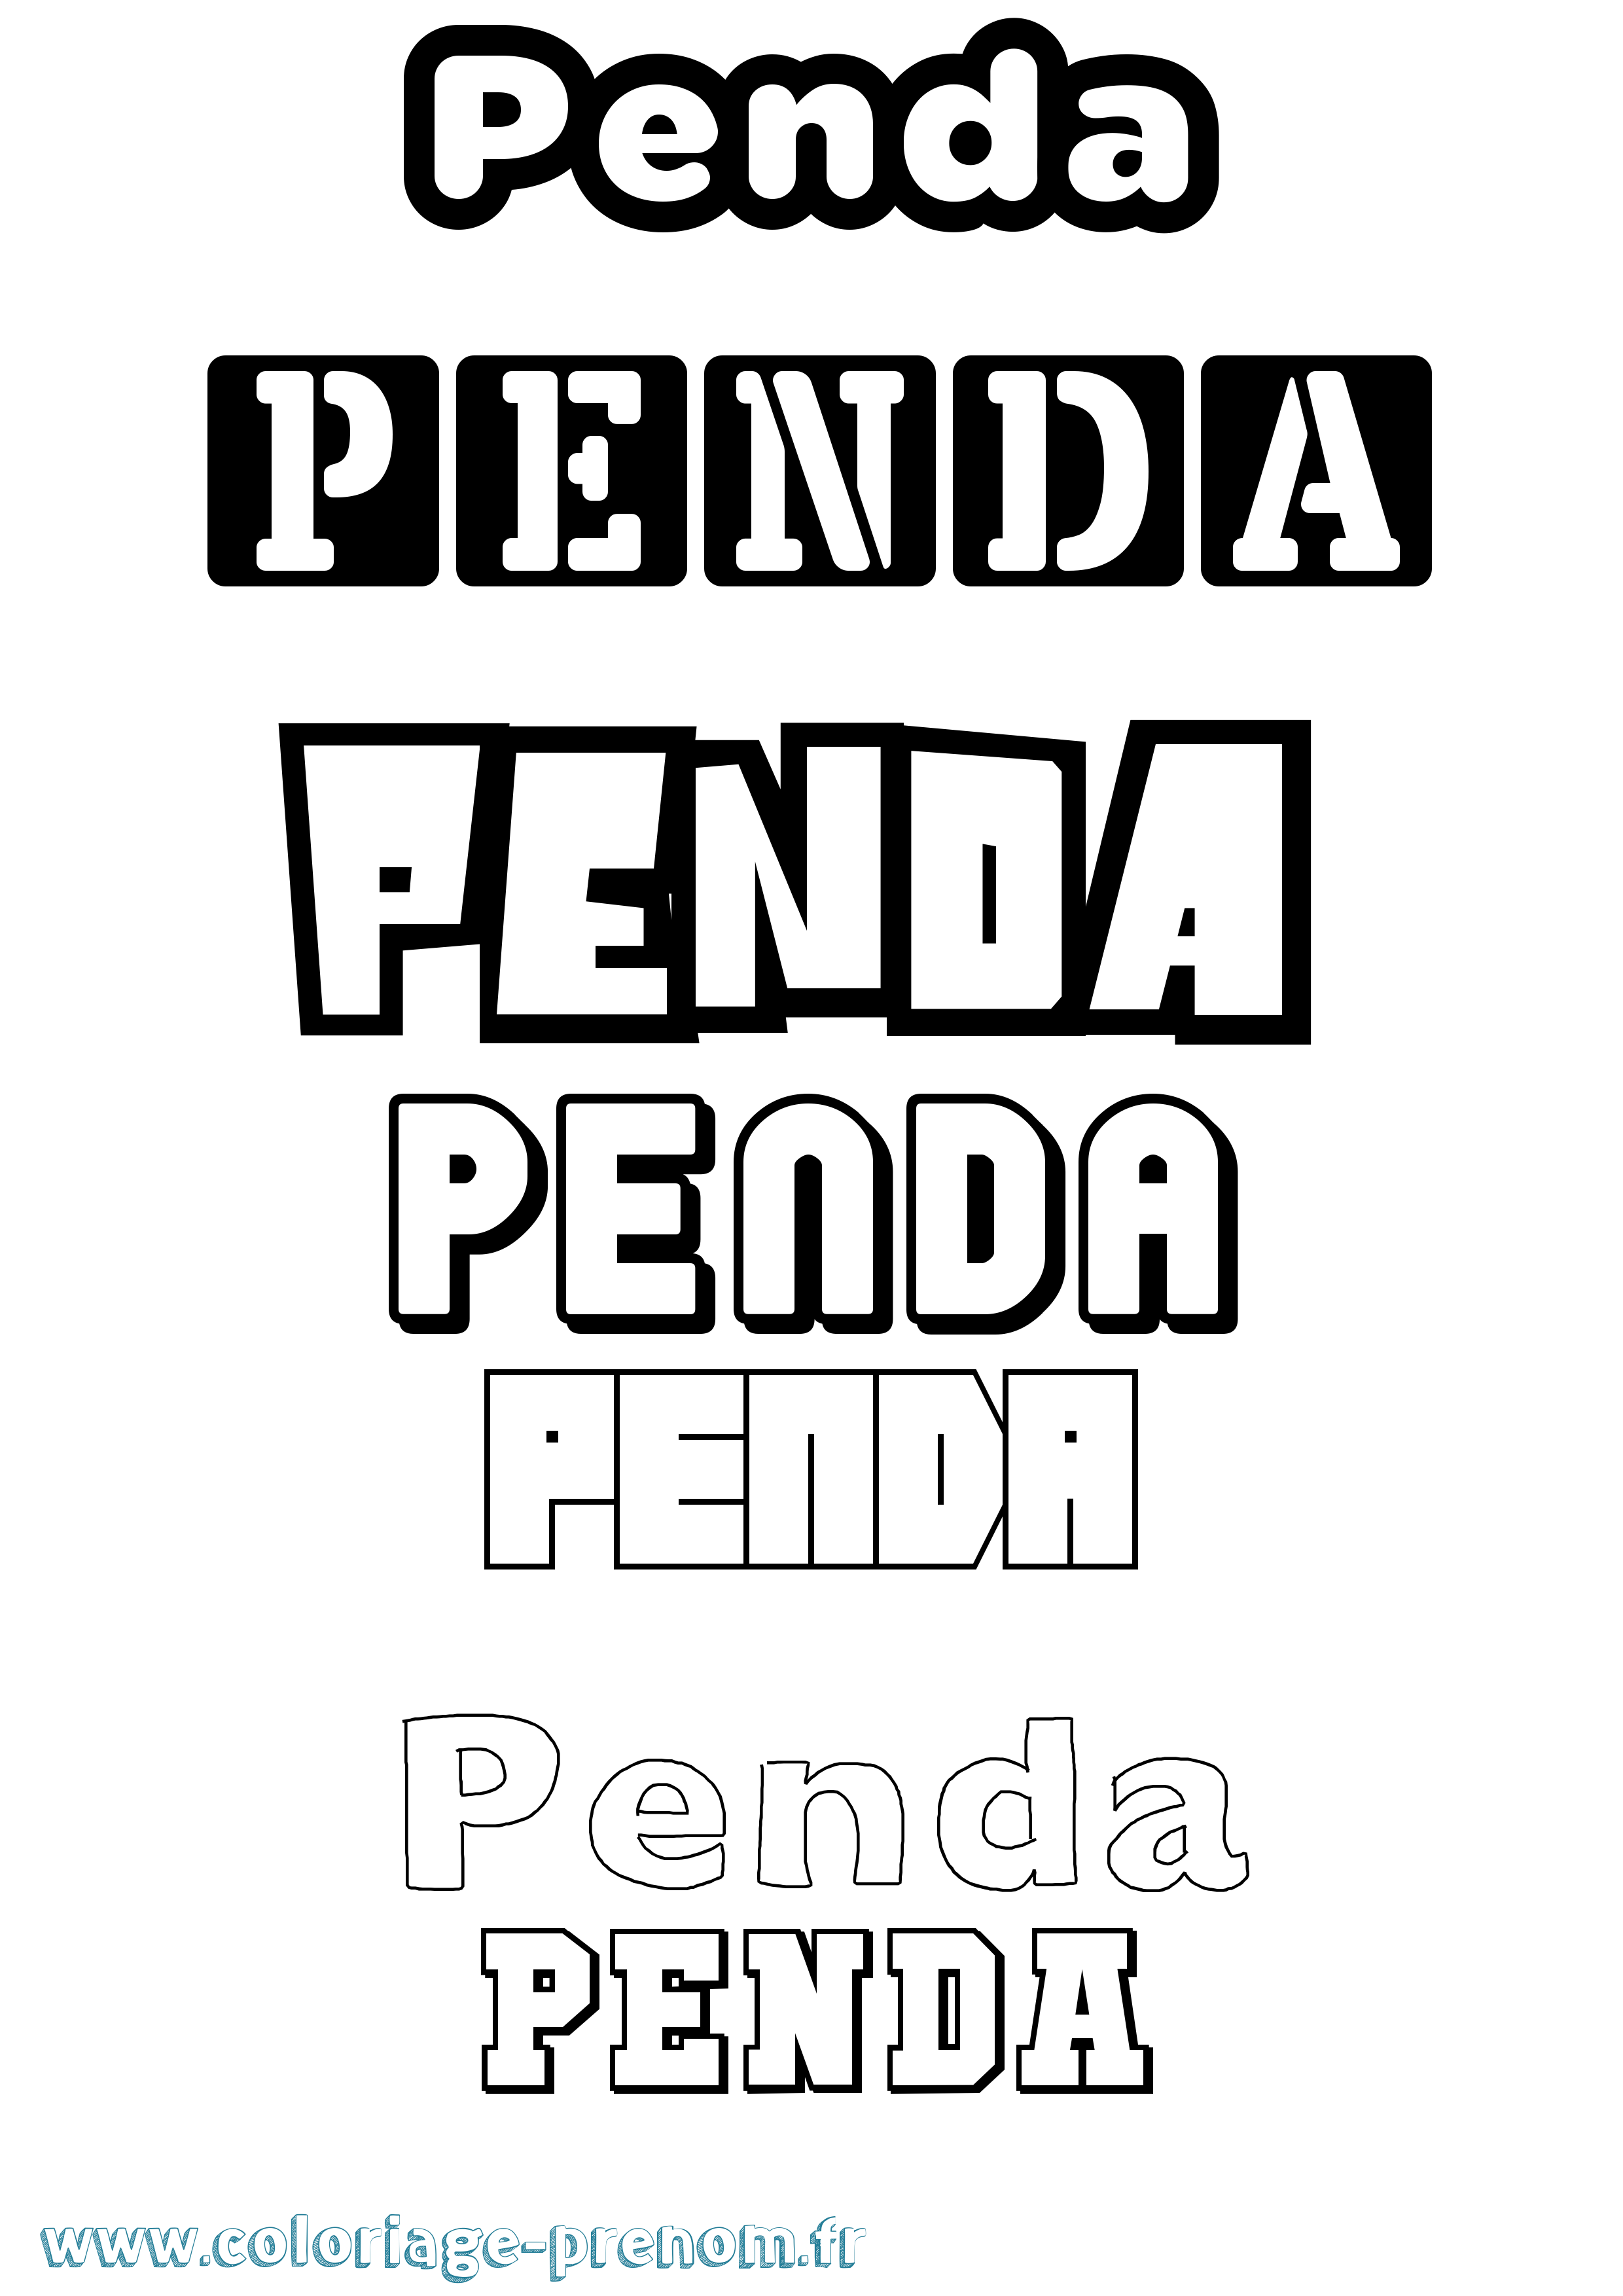 Coloriage prénom Penda